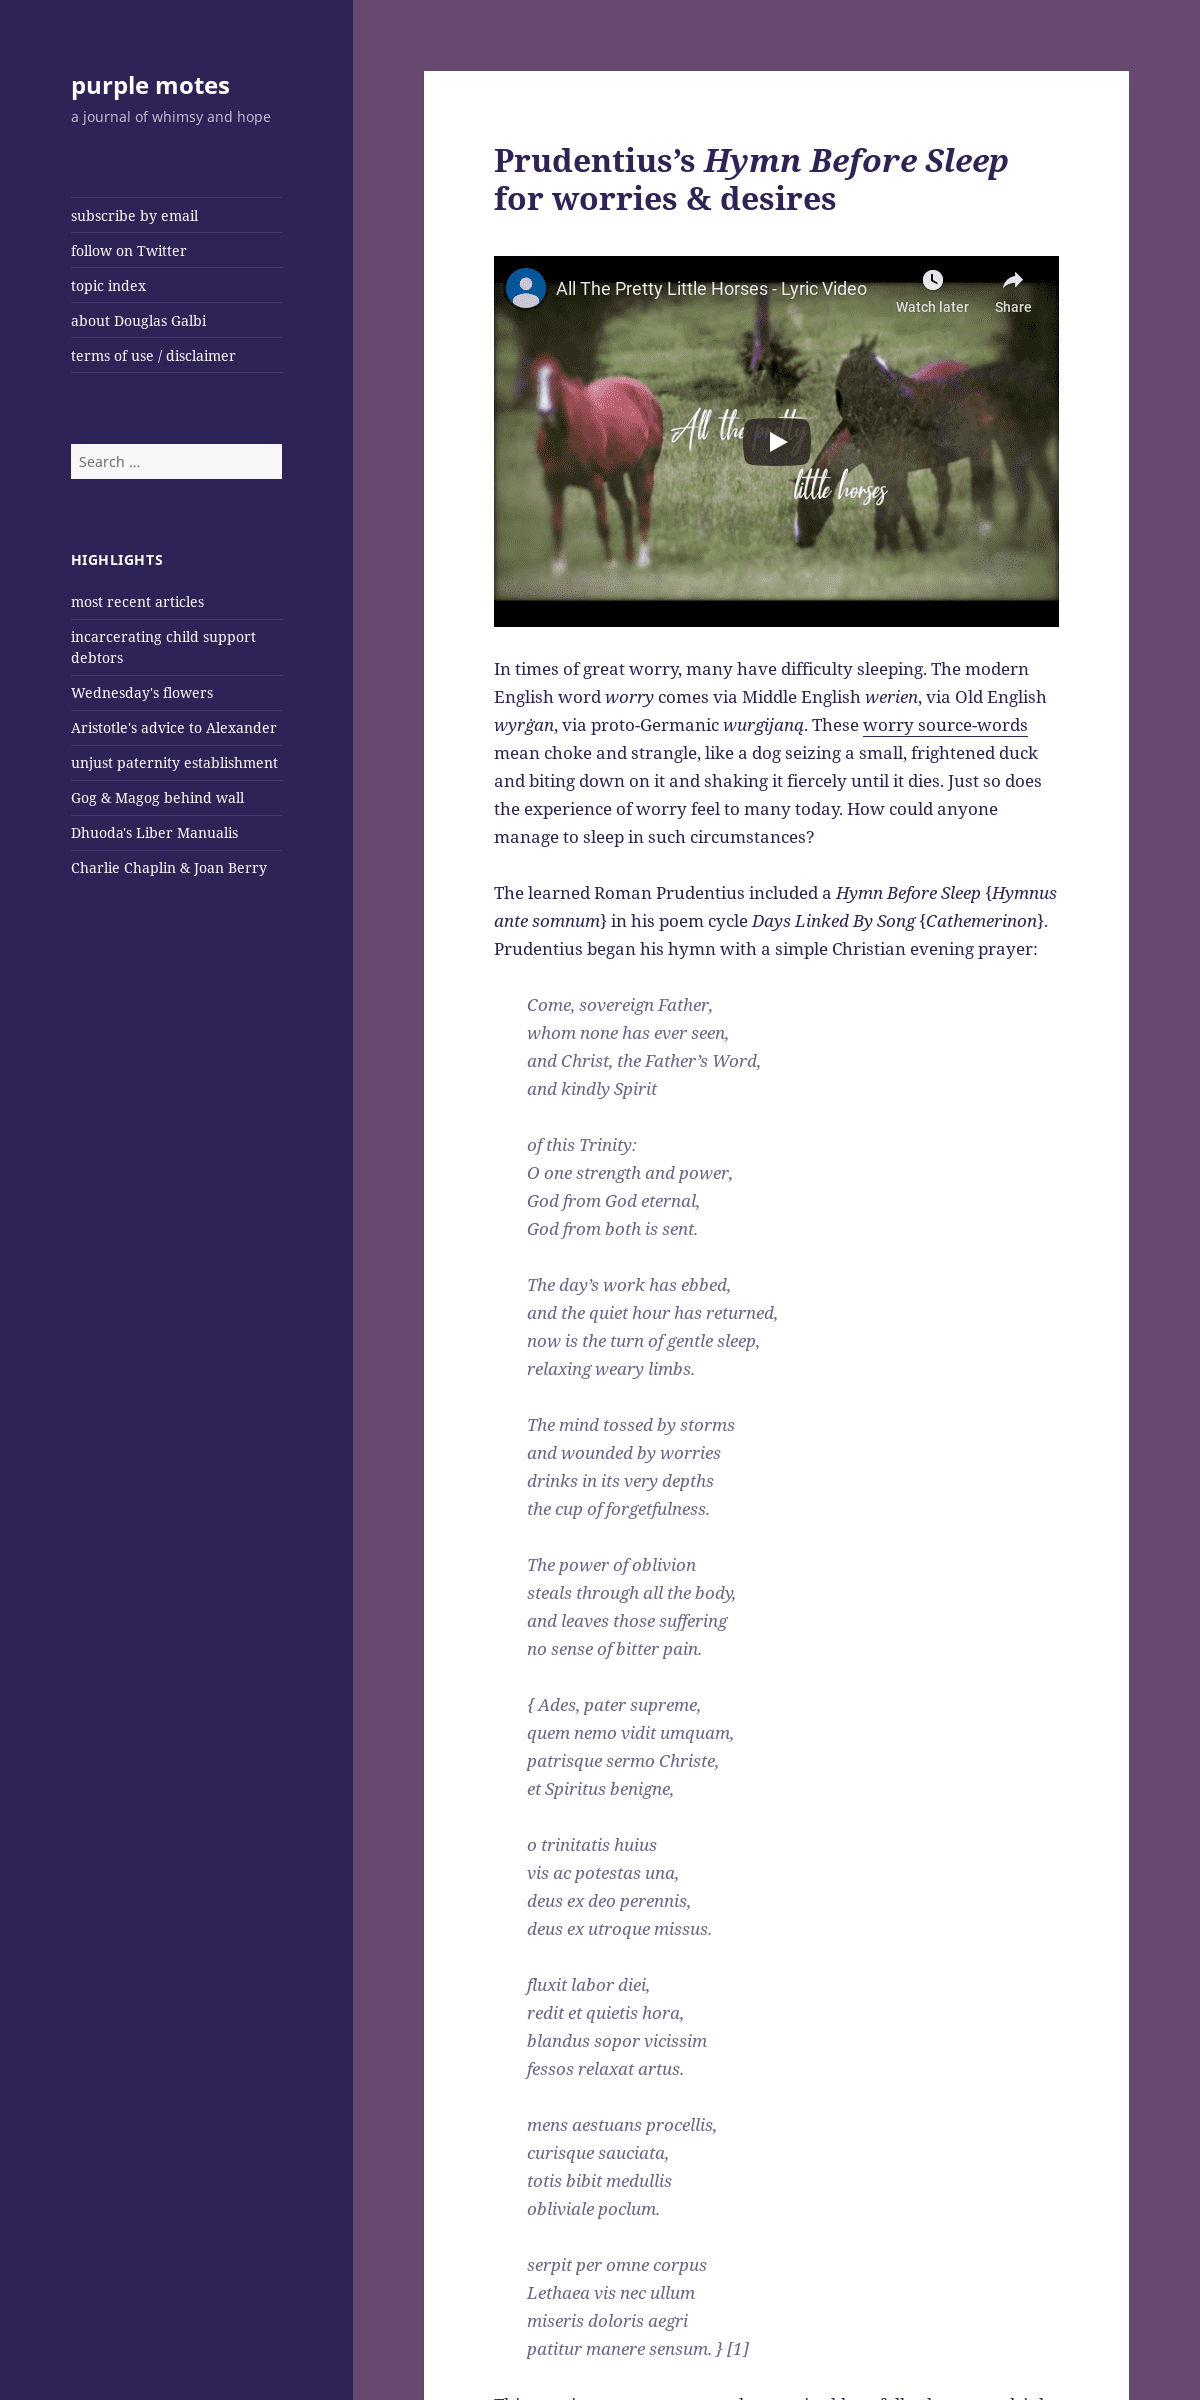 A complete backup of purplemotes.net